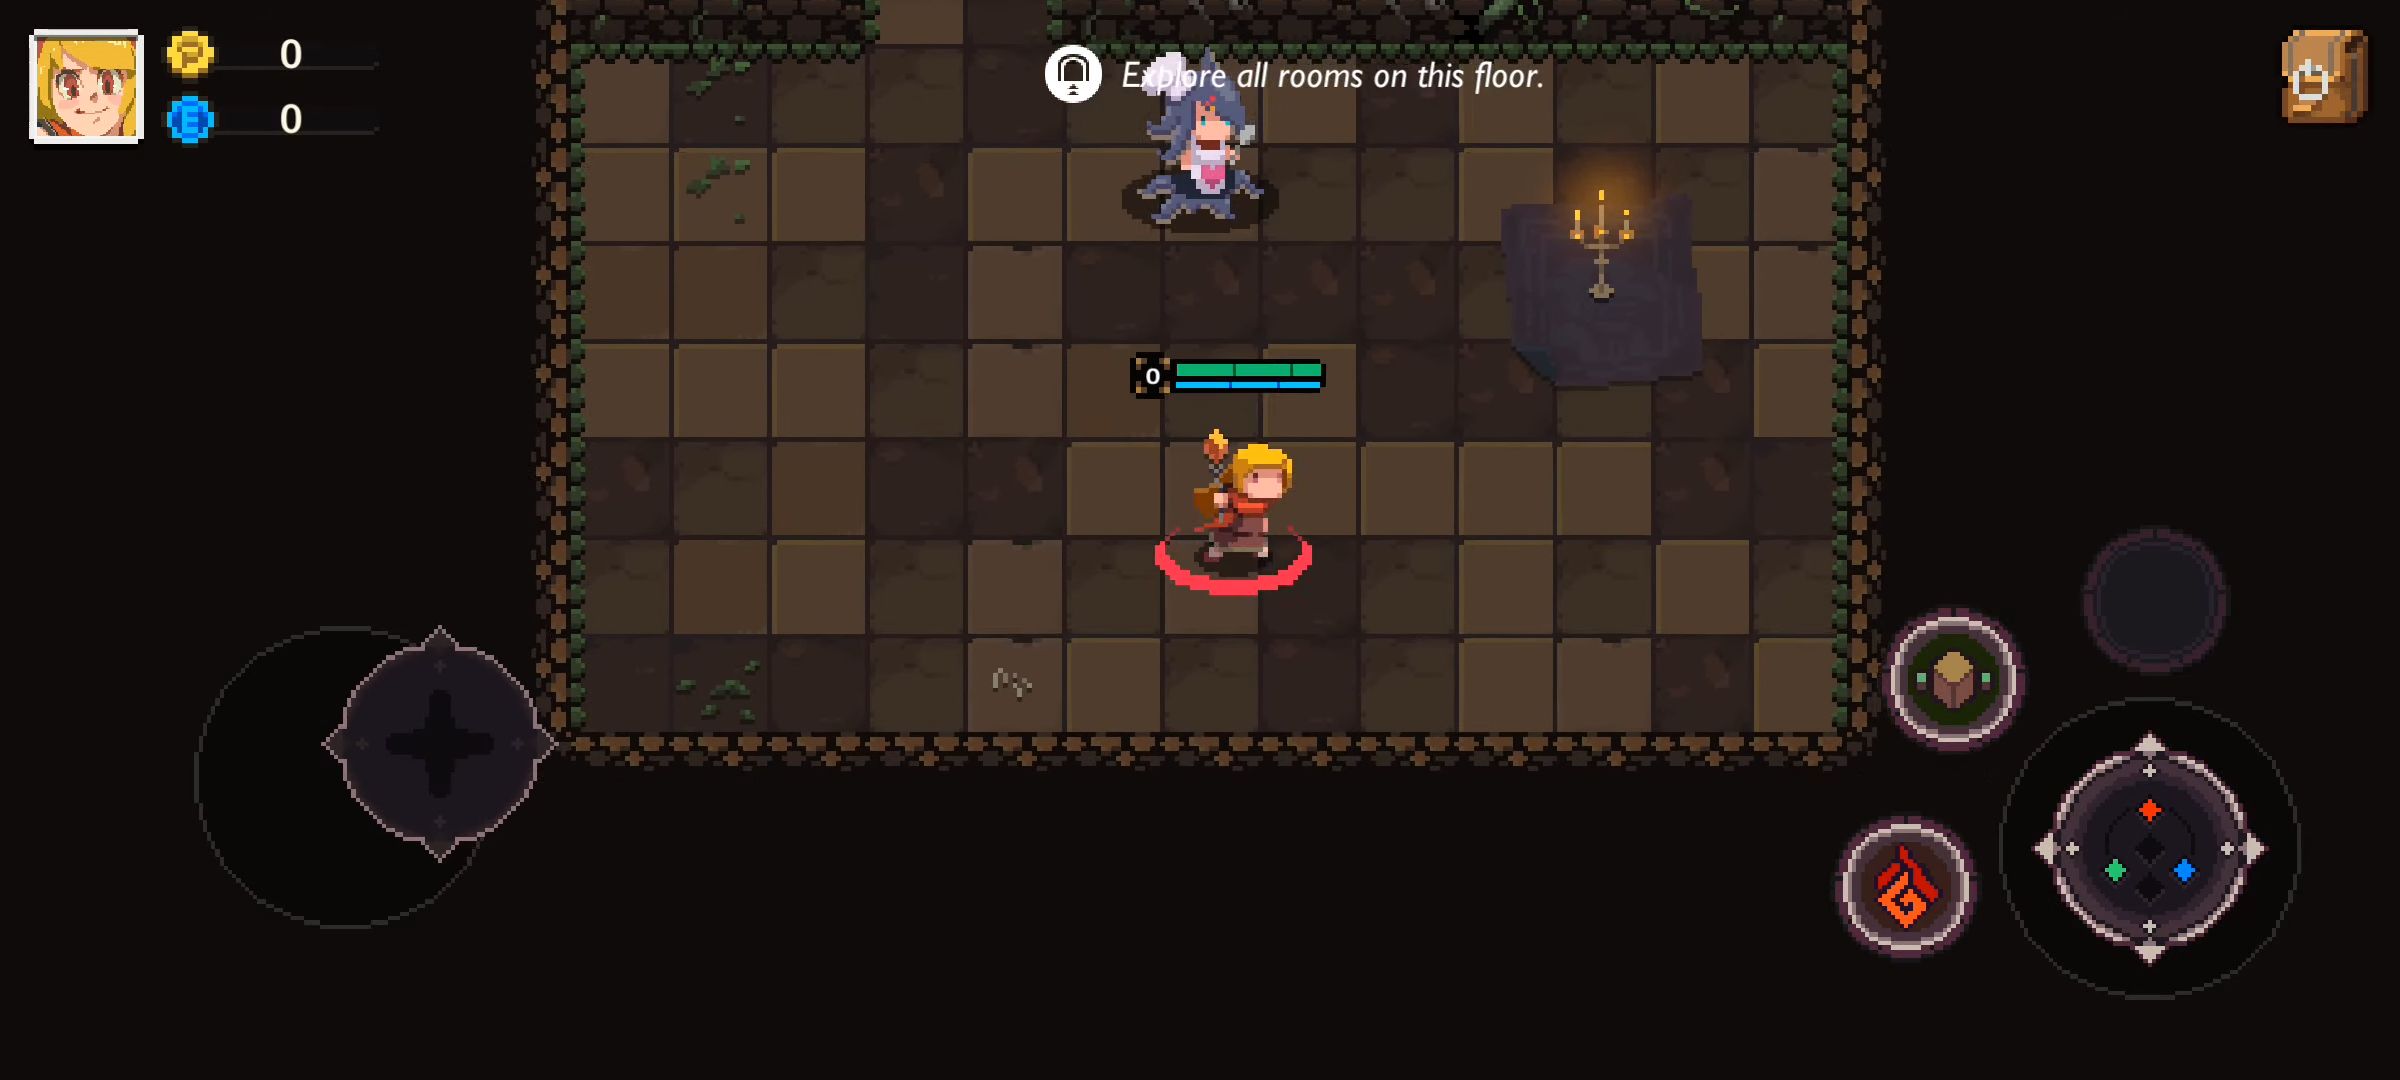 Elemental World - Android game screenshots.